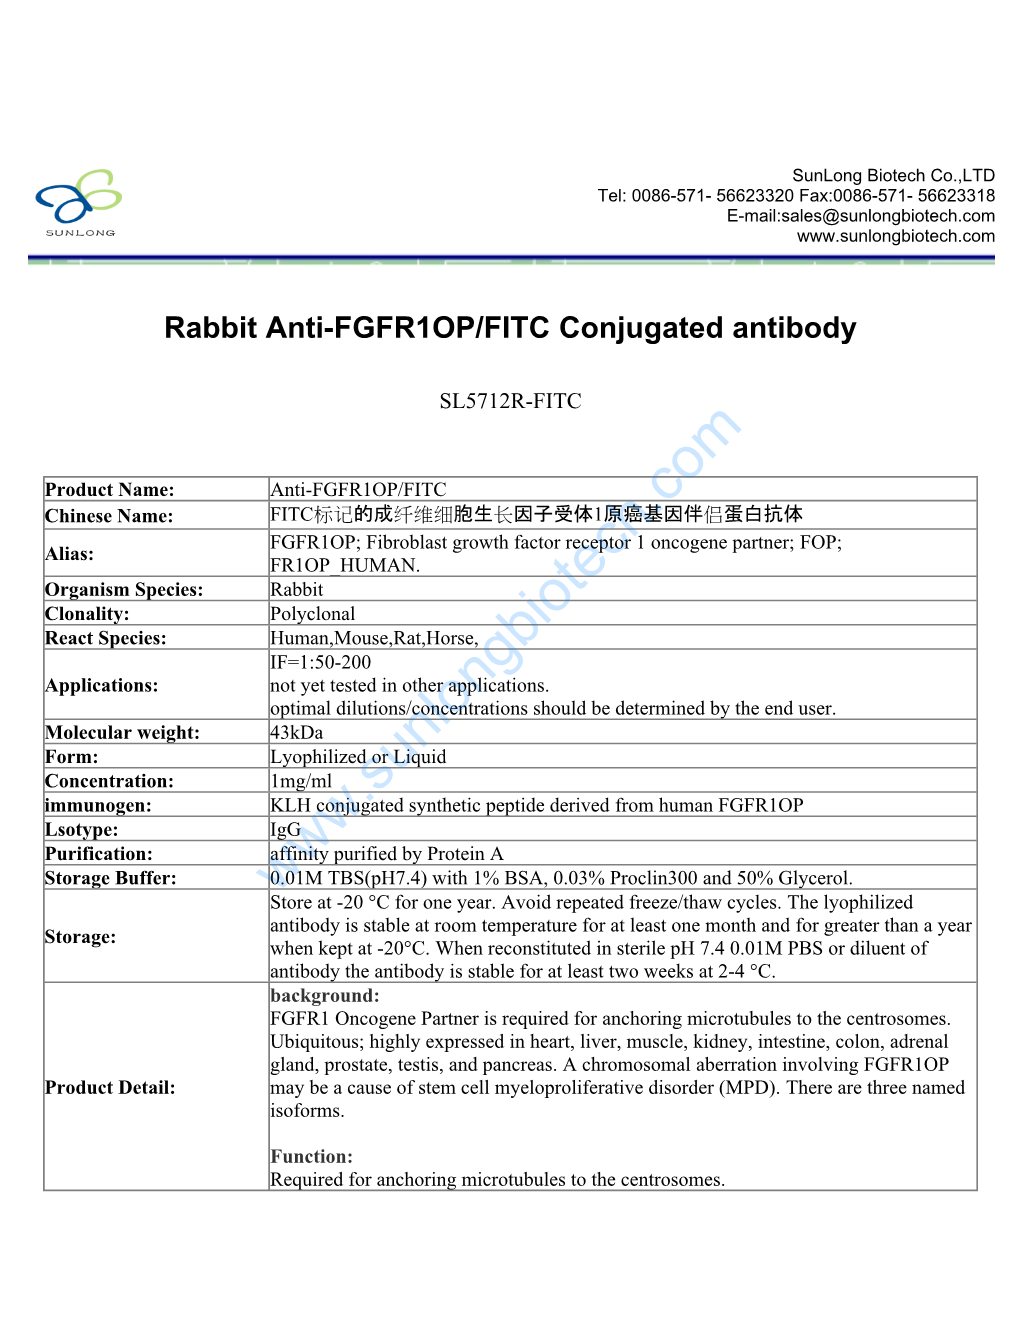 Rabbit Anti-FGFR1OP/FITC Conjugated Antibody